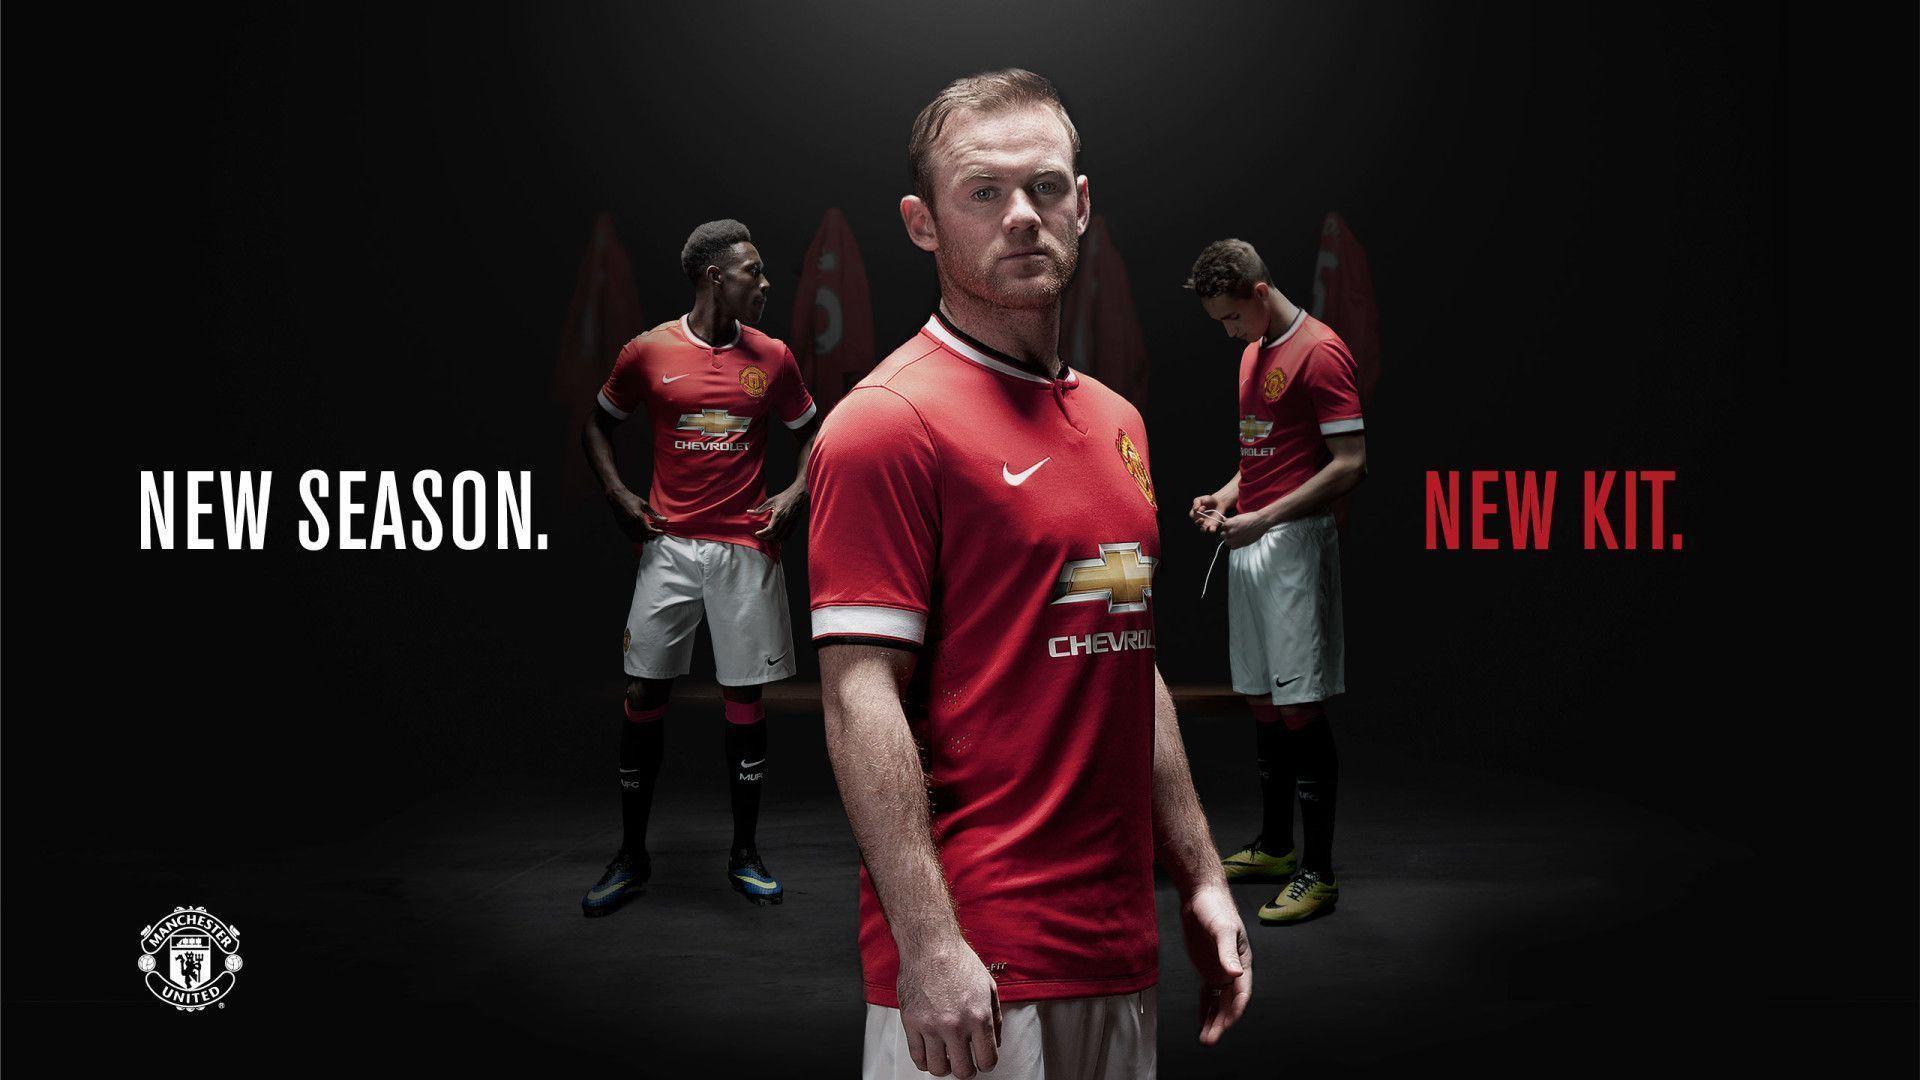 Manchester United Logo Wallpaper HD 2015